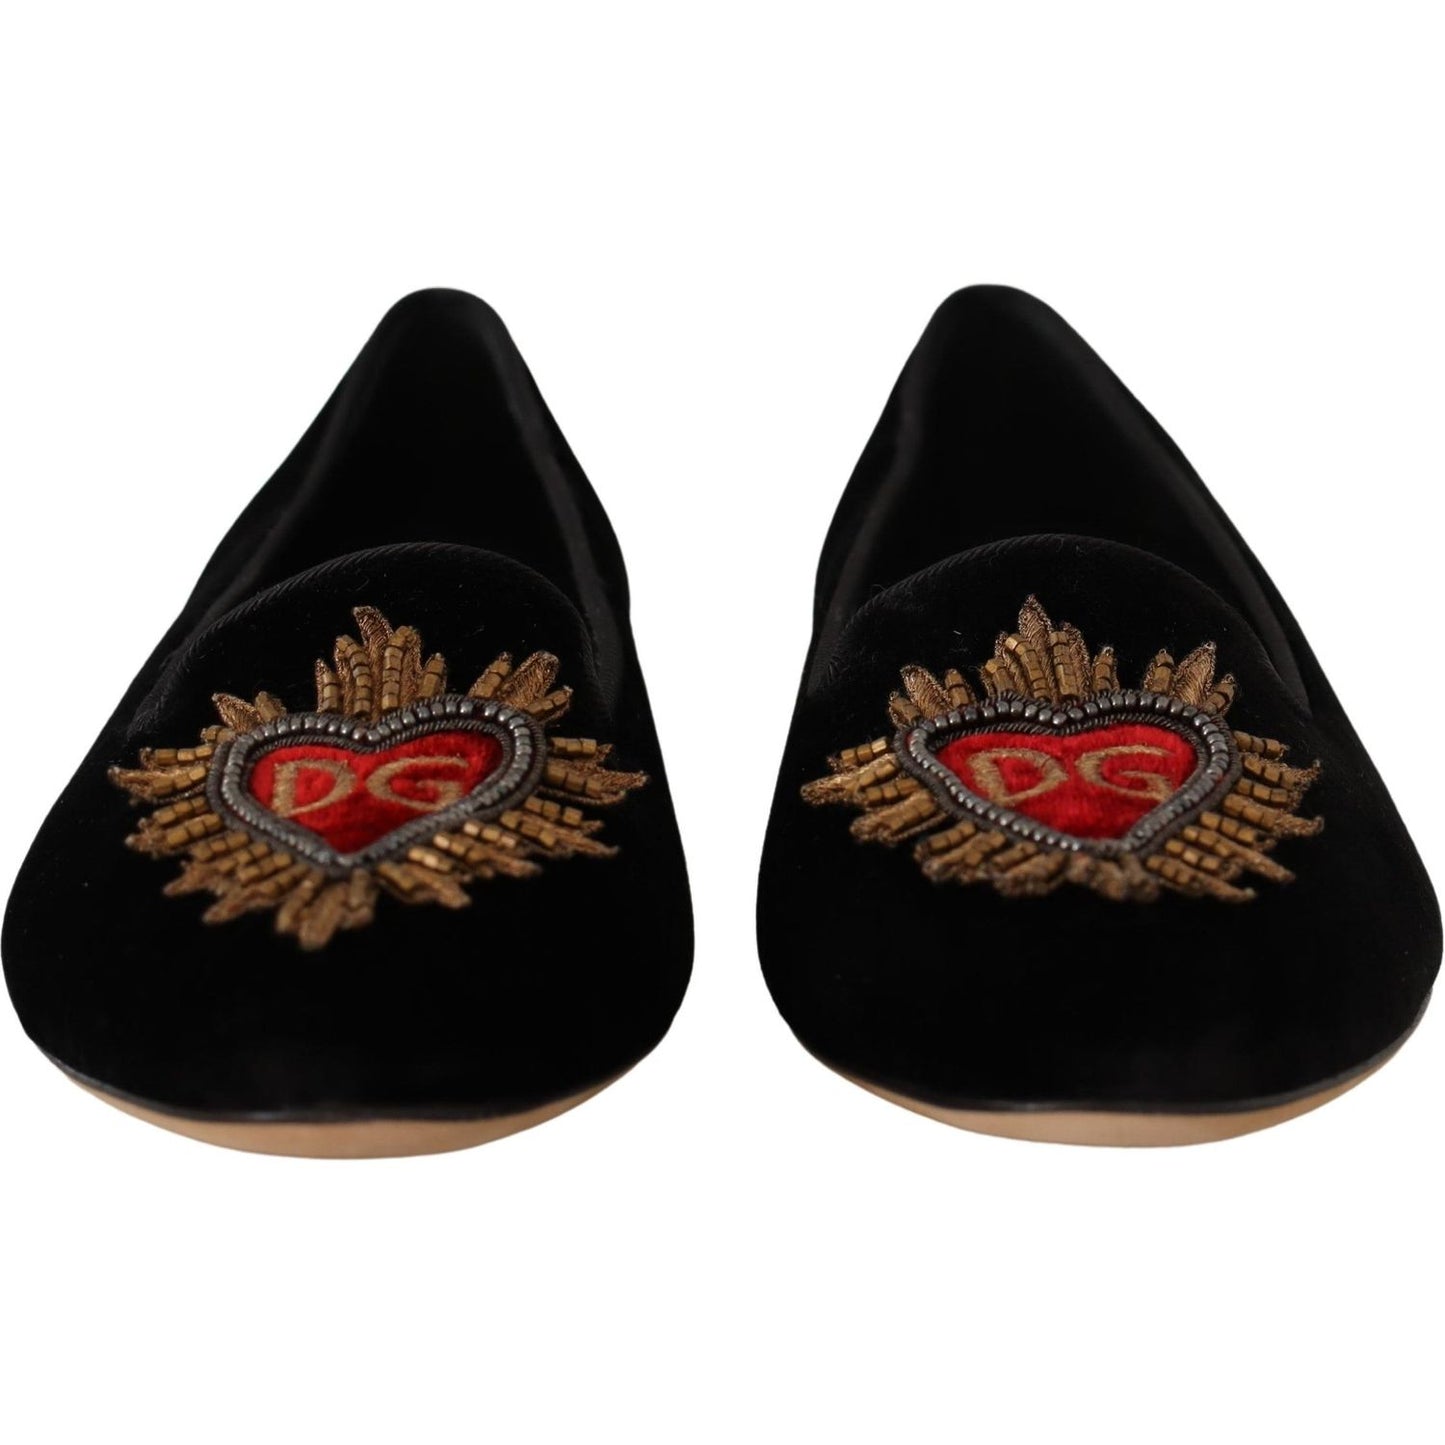 Dolce & GabbanaElegant Patent Leather Flat ShoesMcRichard Designer Brands£329.00